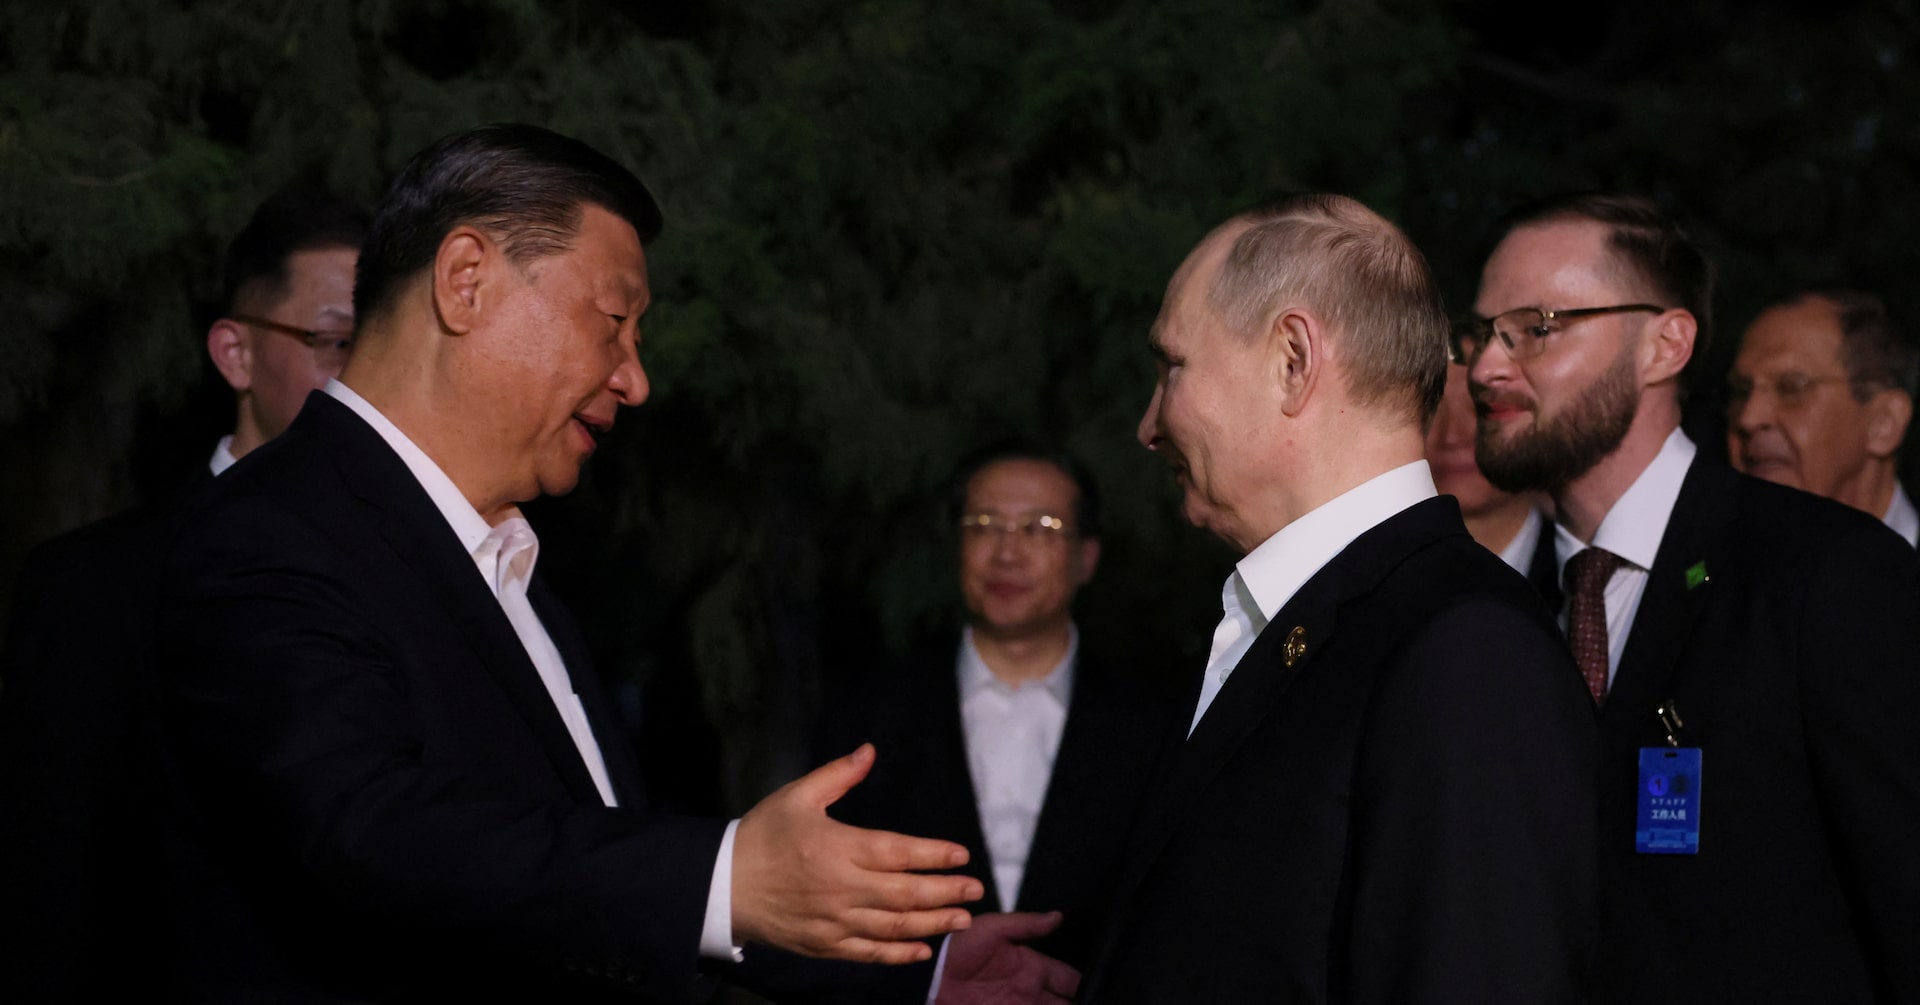 Hugs but not the full socialist-era kiss for Putin, Xi in Beijing - Reuters